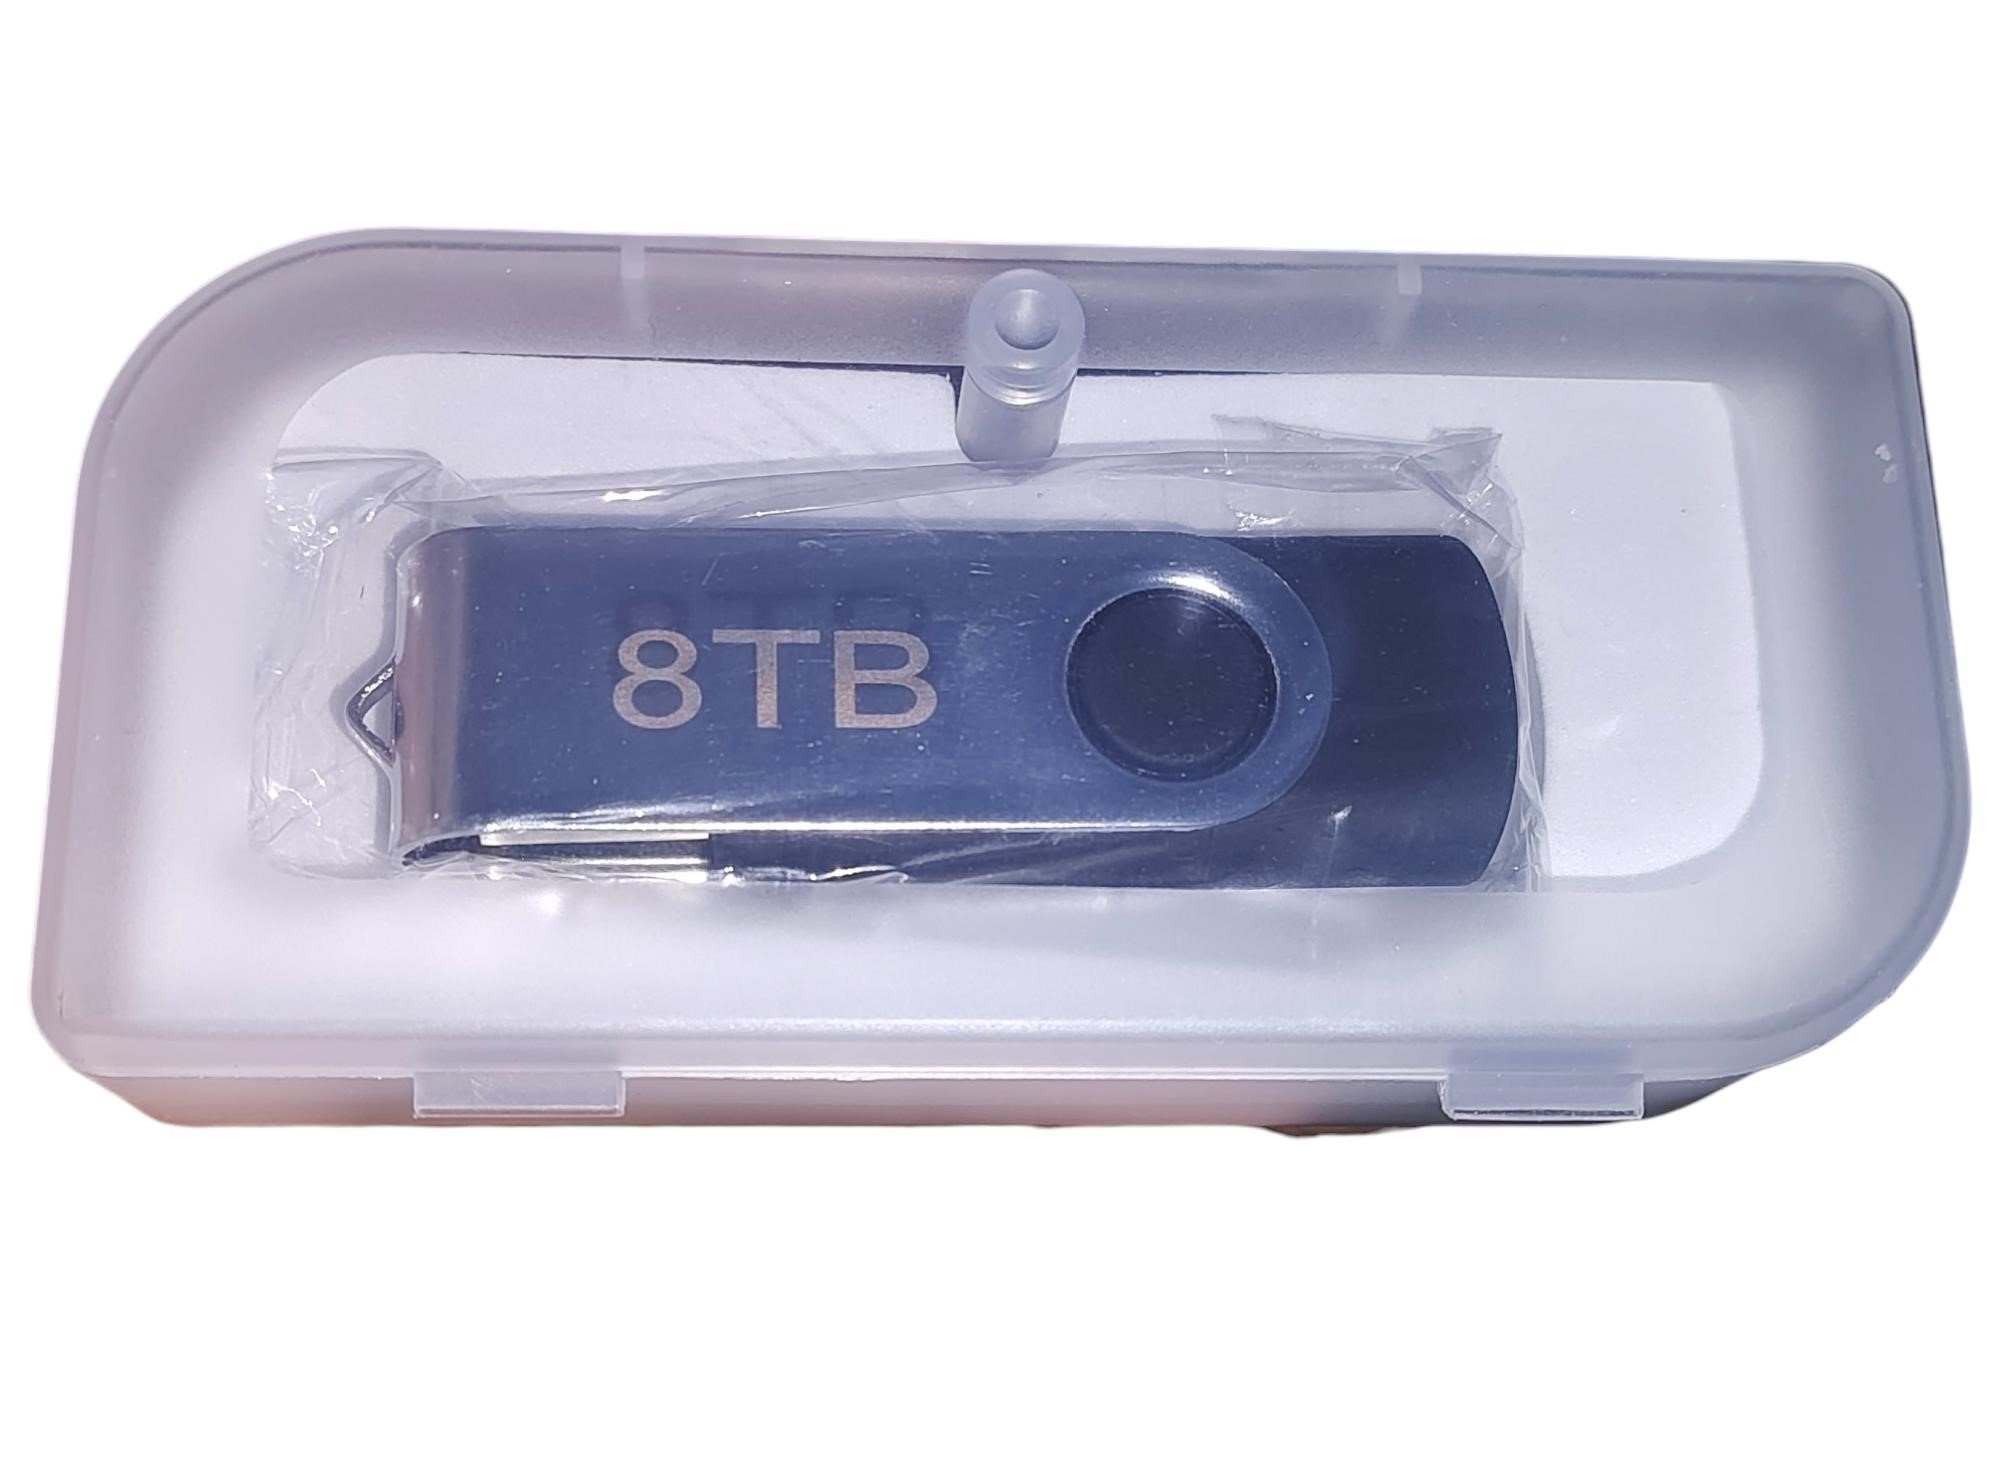 USB FLASH DRIVE 8 TB MEMORY USB